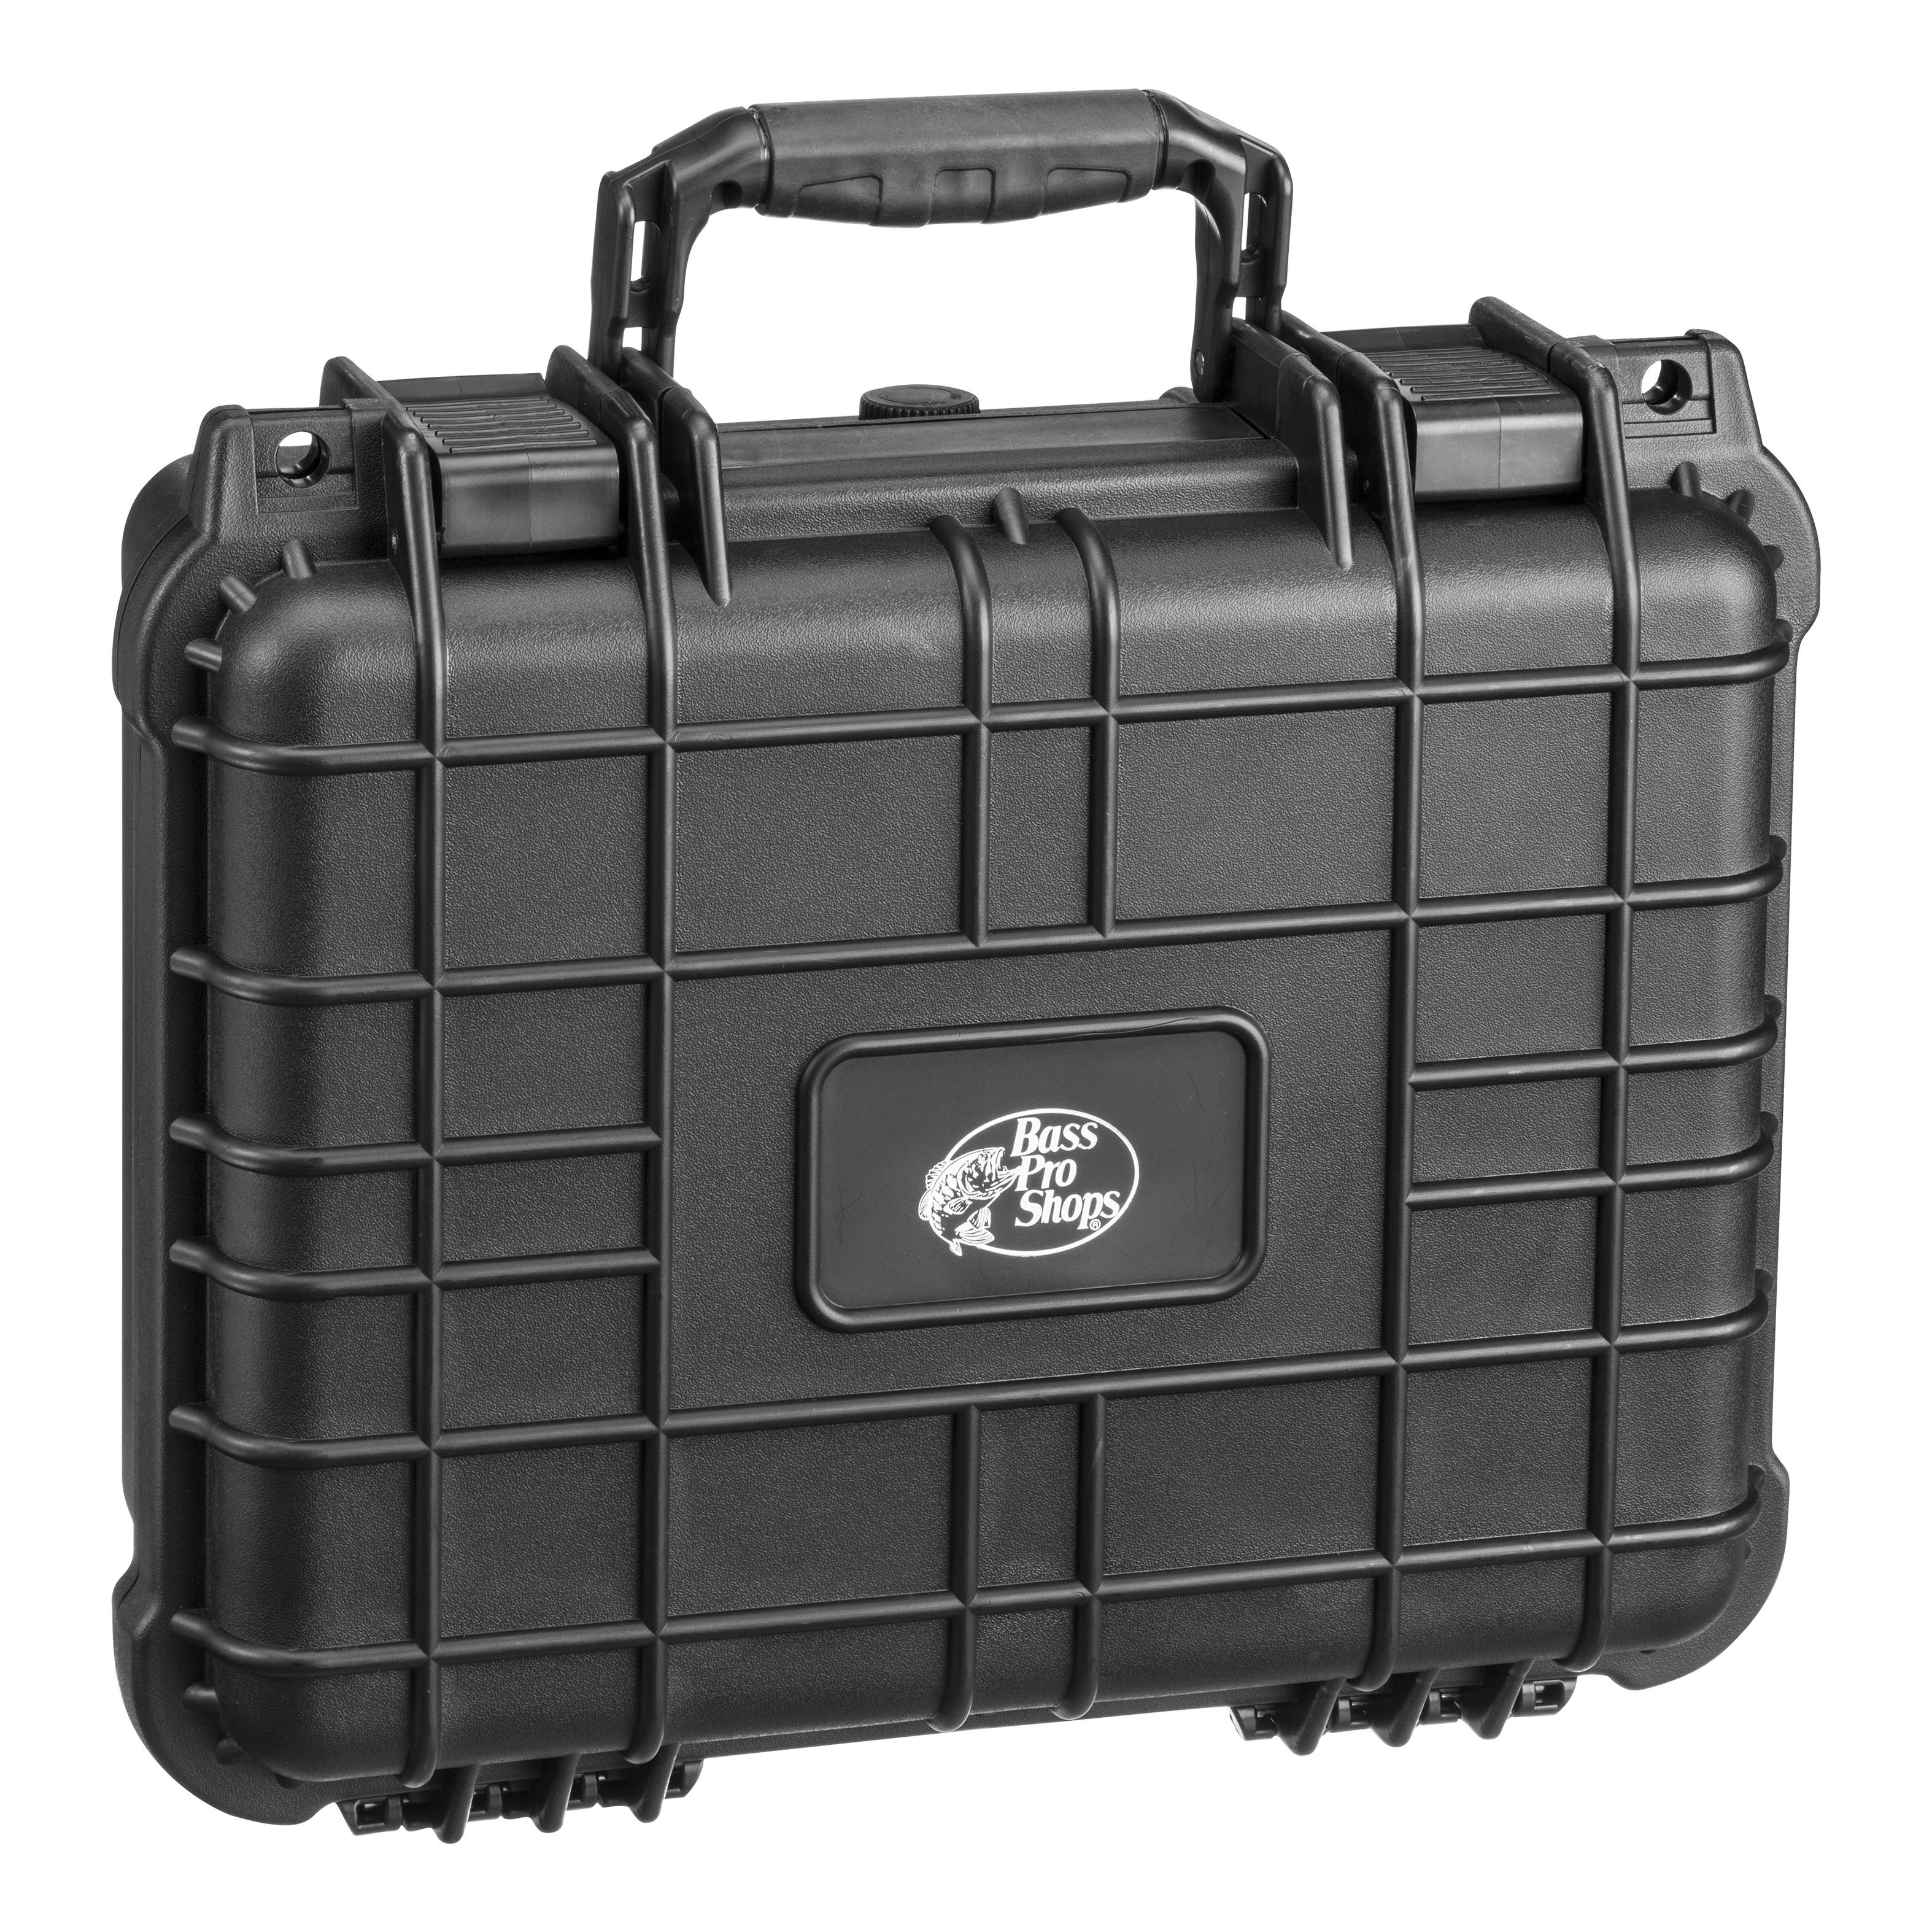 Waterproof Cases & Gear Boxes